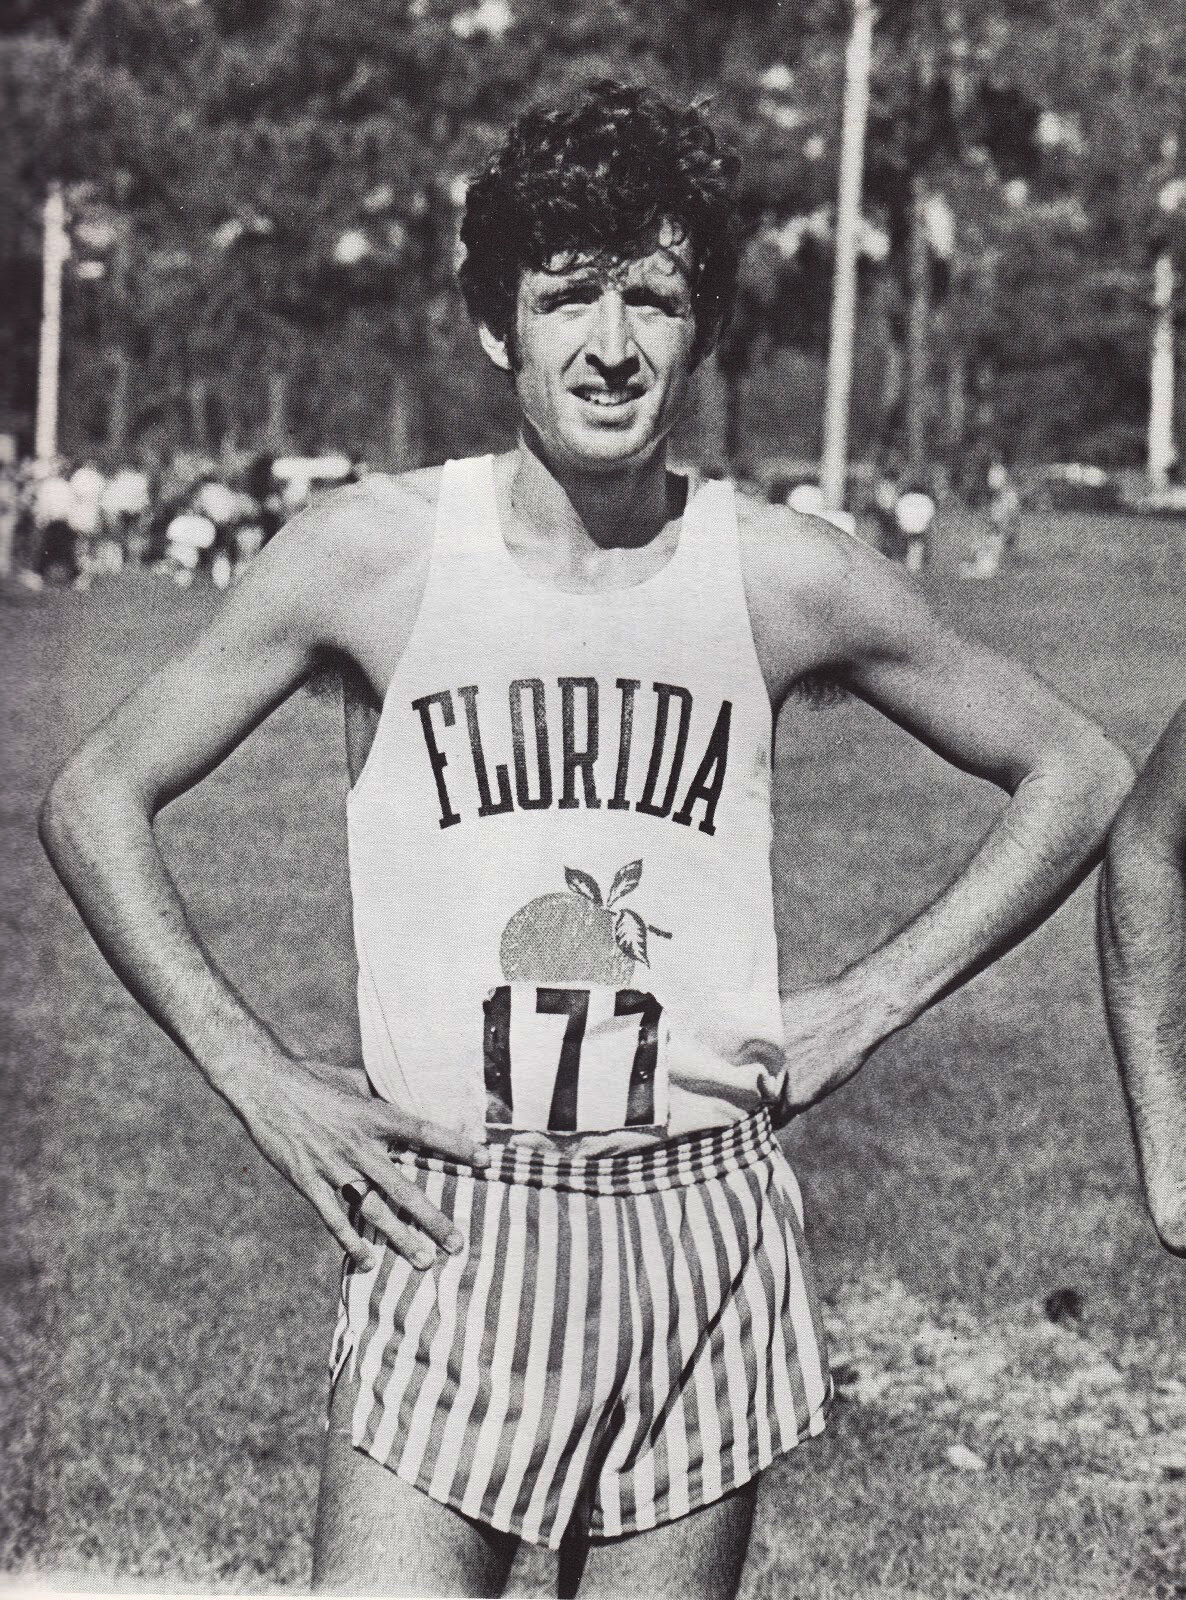  Florida Track Club member, Frank Shorter 